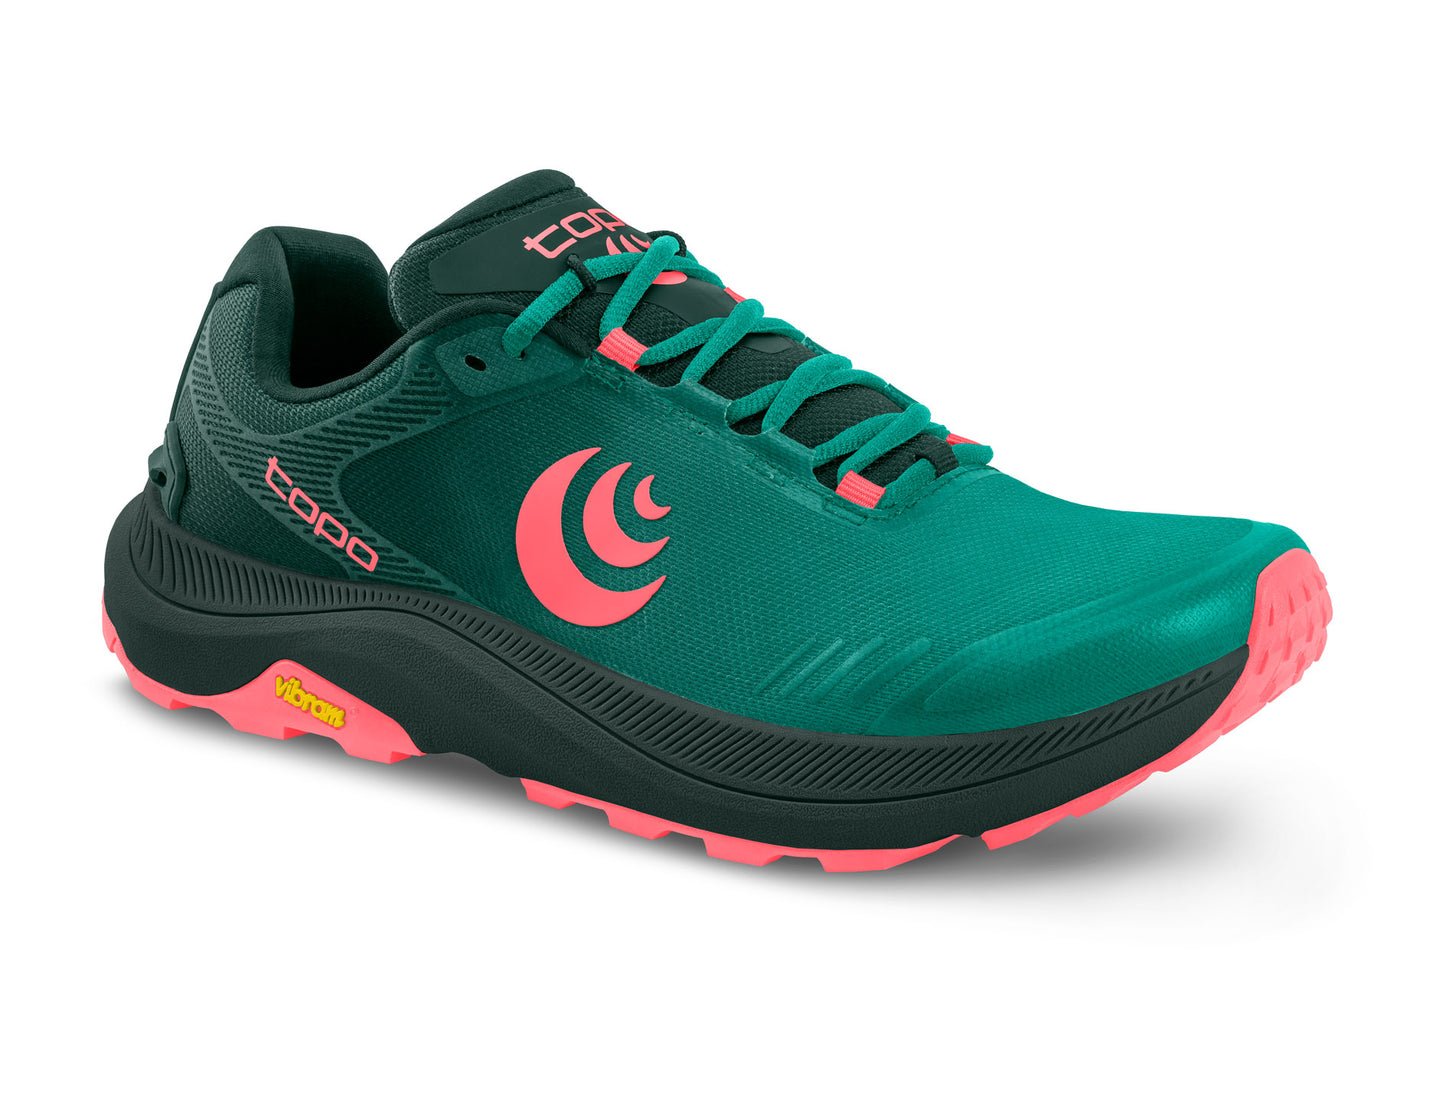 Topo Athletic - MT-5  - Emerald / Pink - Women's